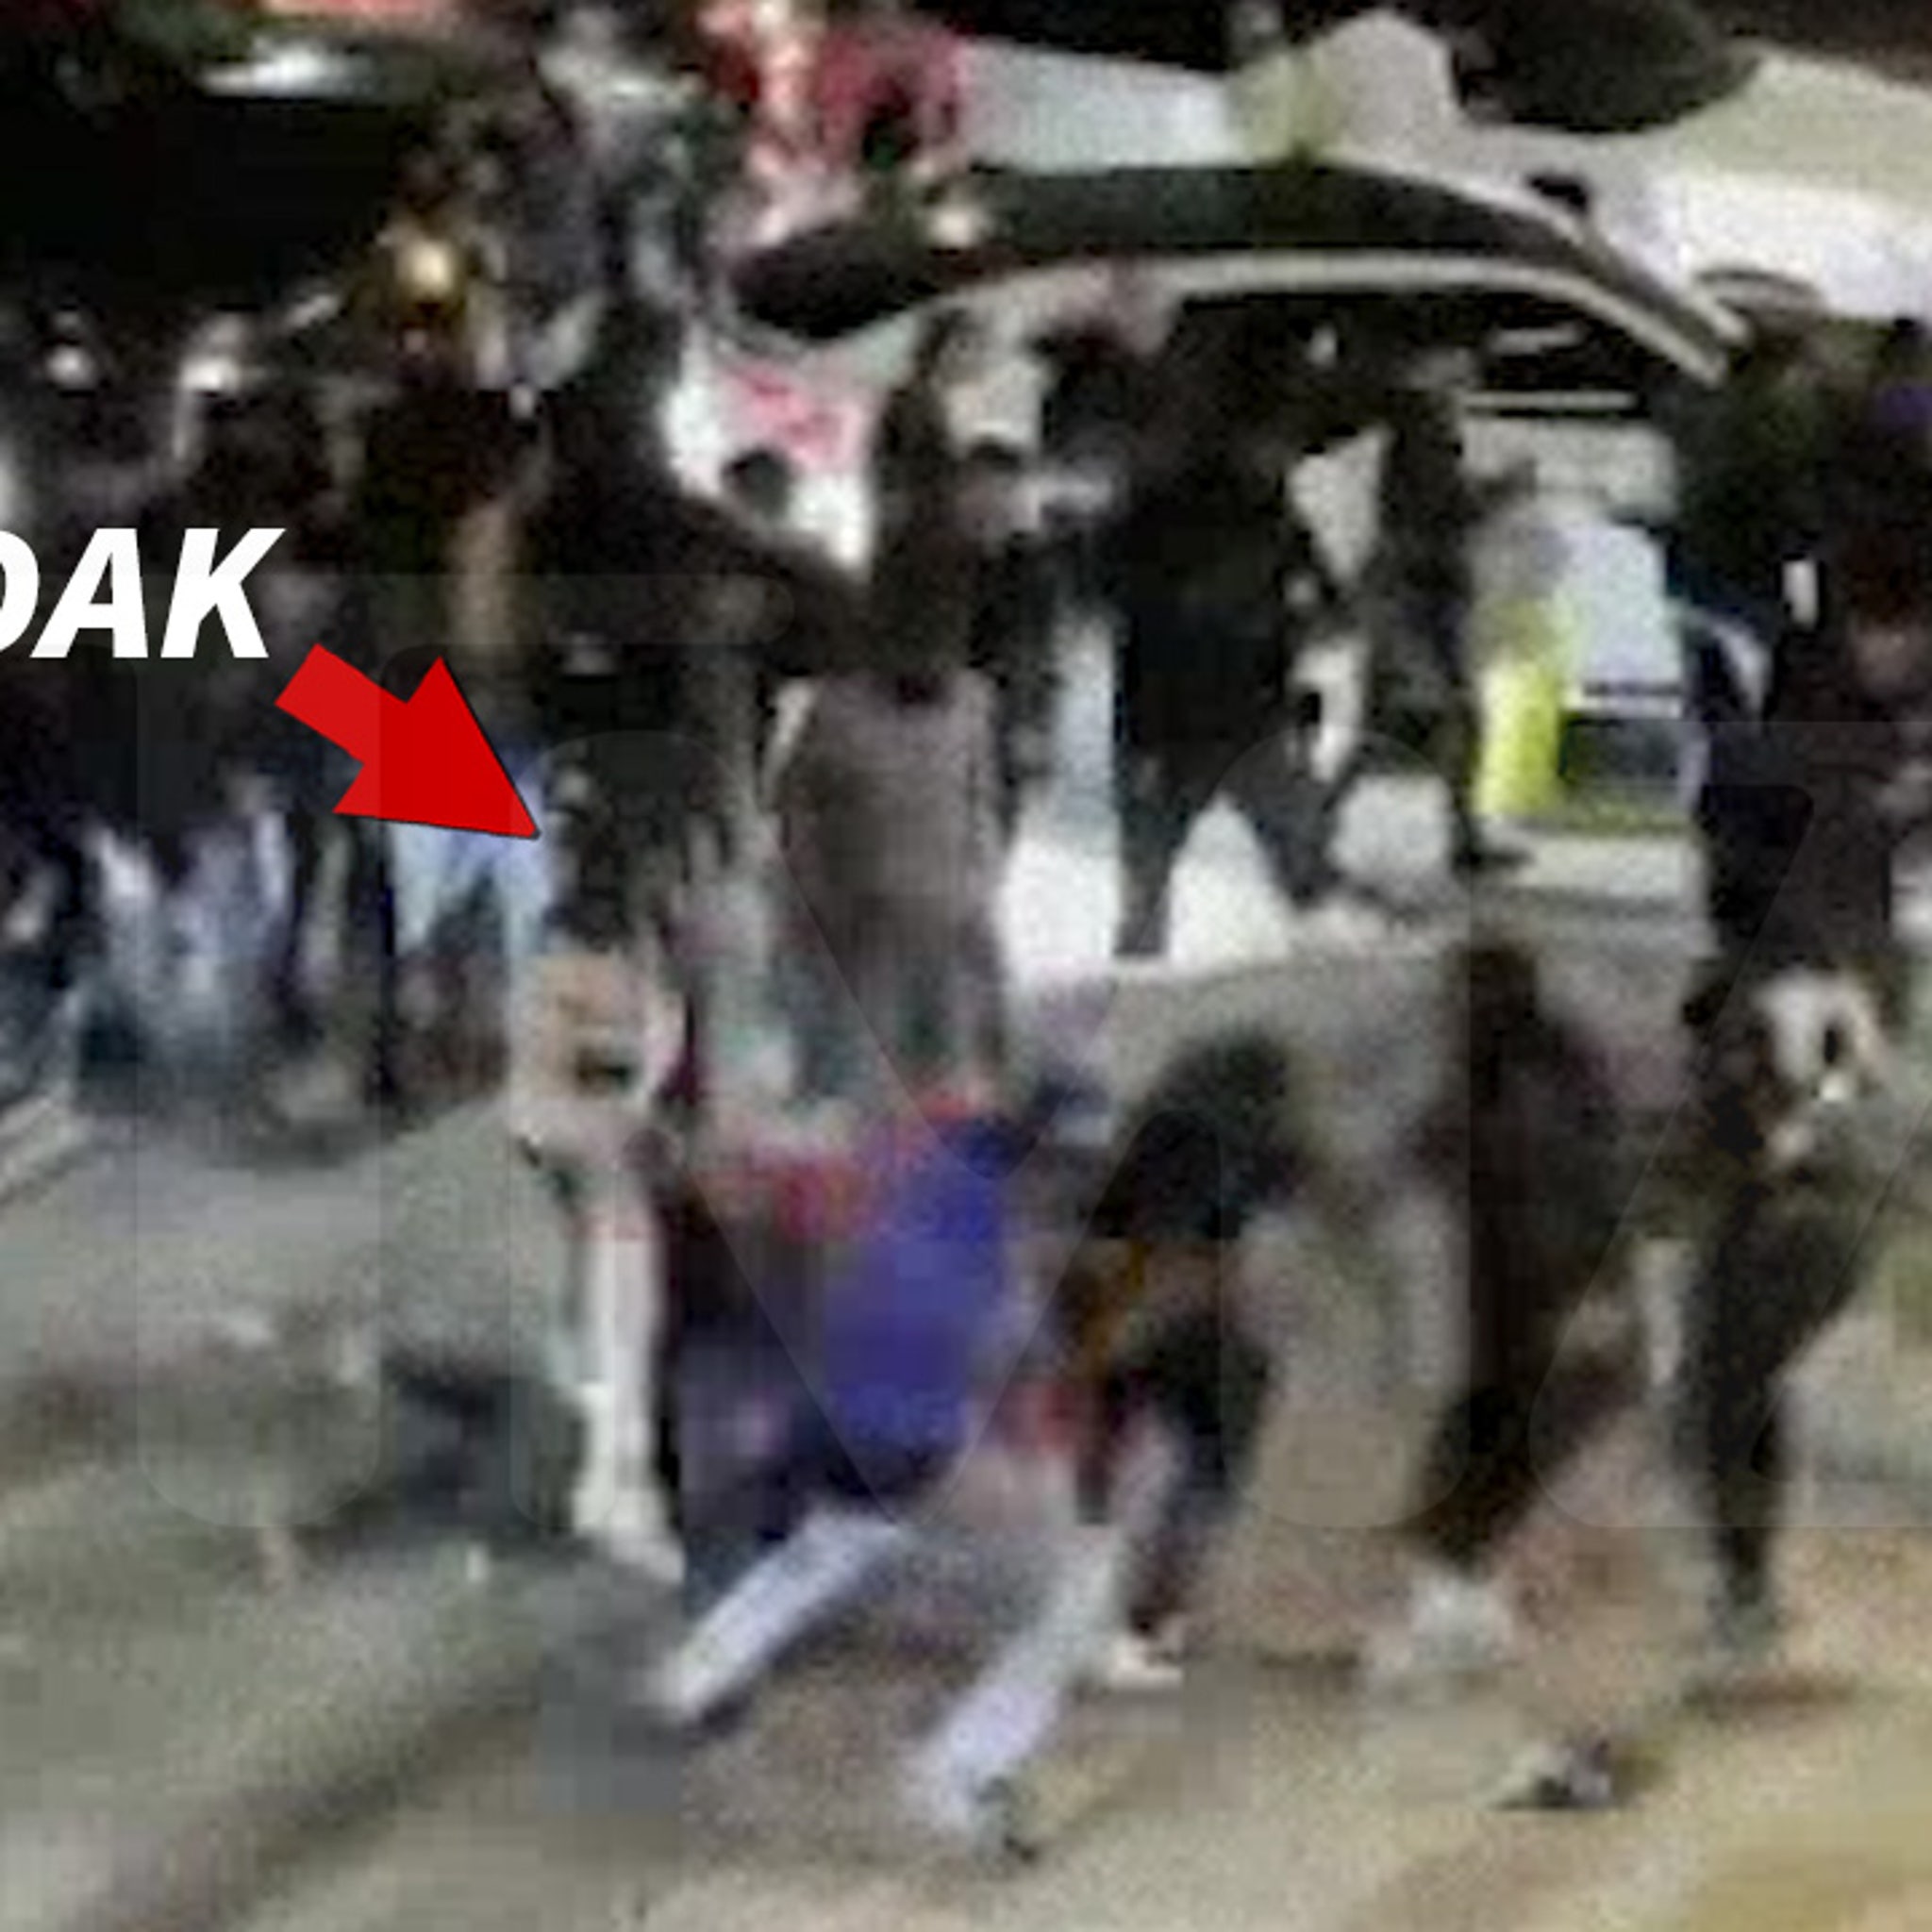 Kodak Black Shows Off Leg Injury After Being Shot During Super